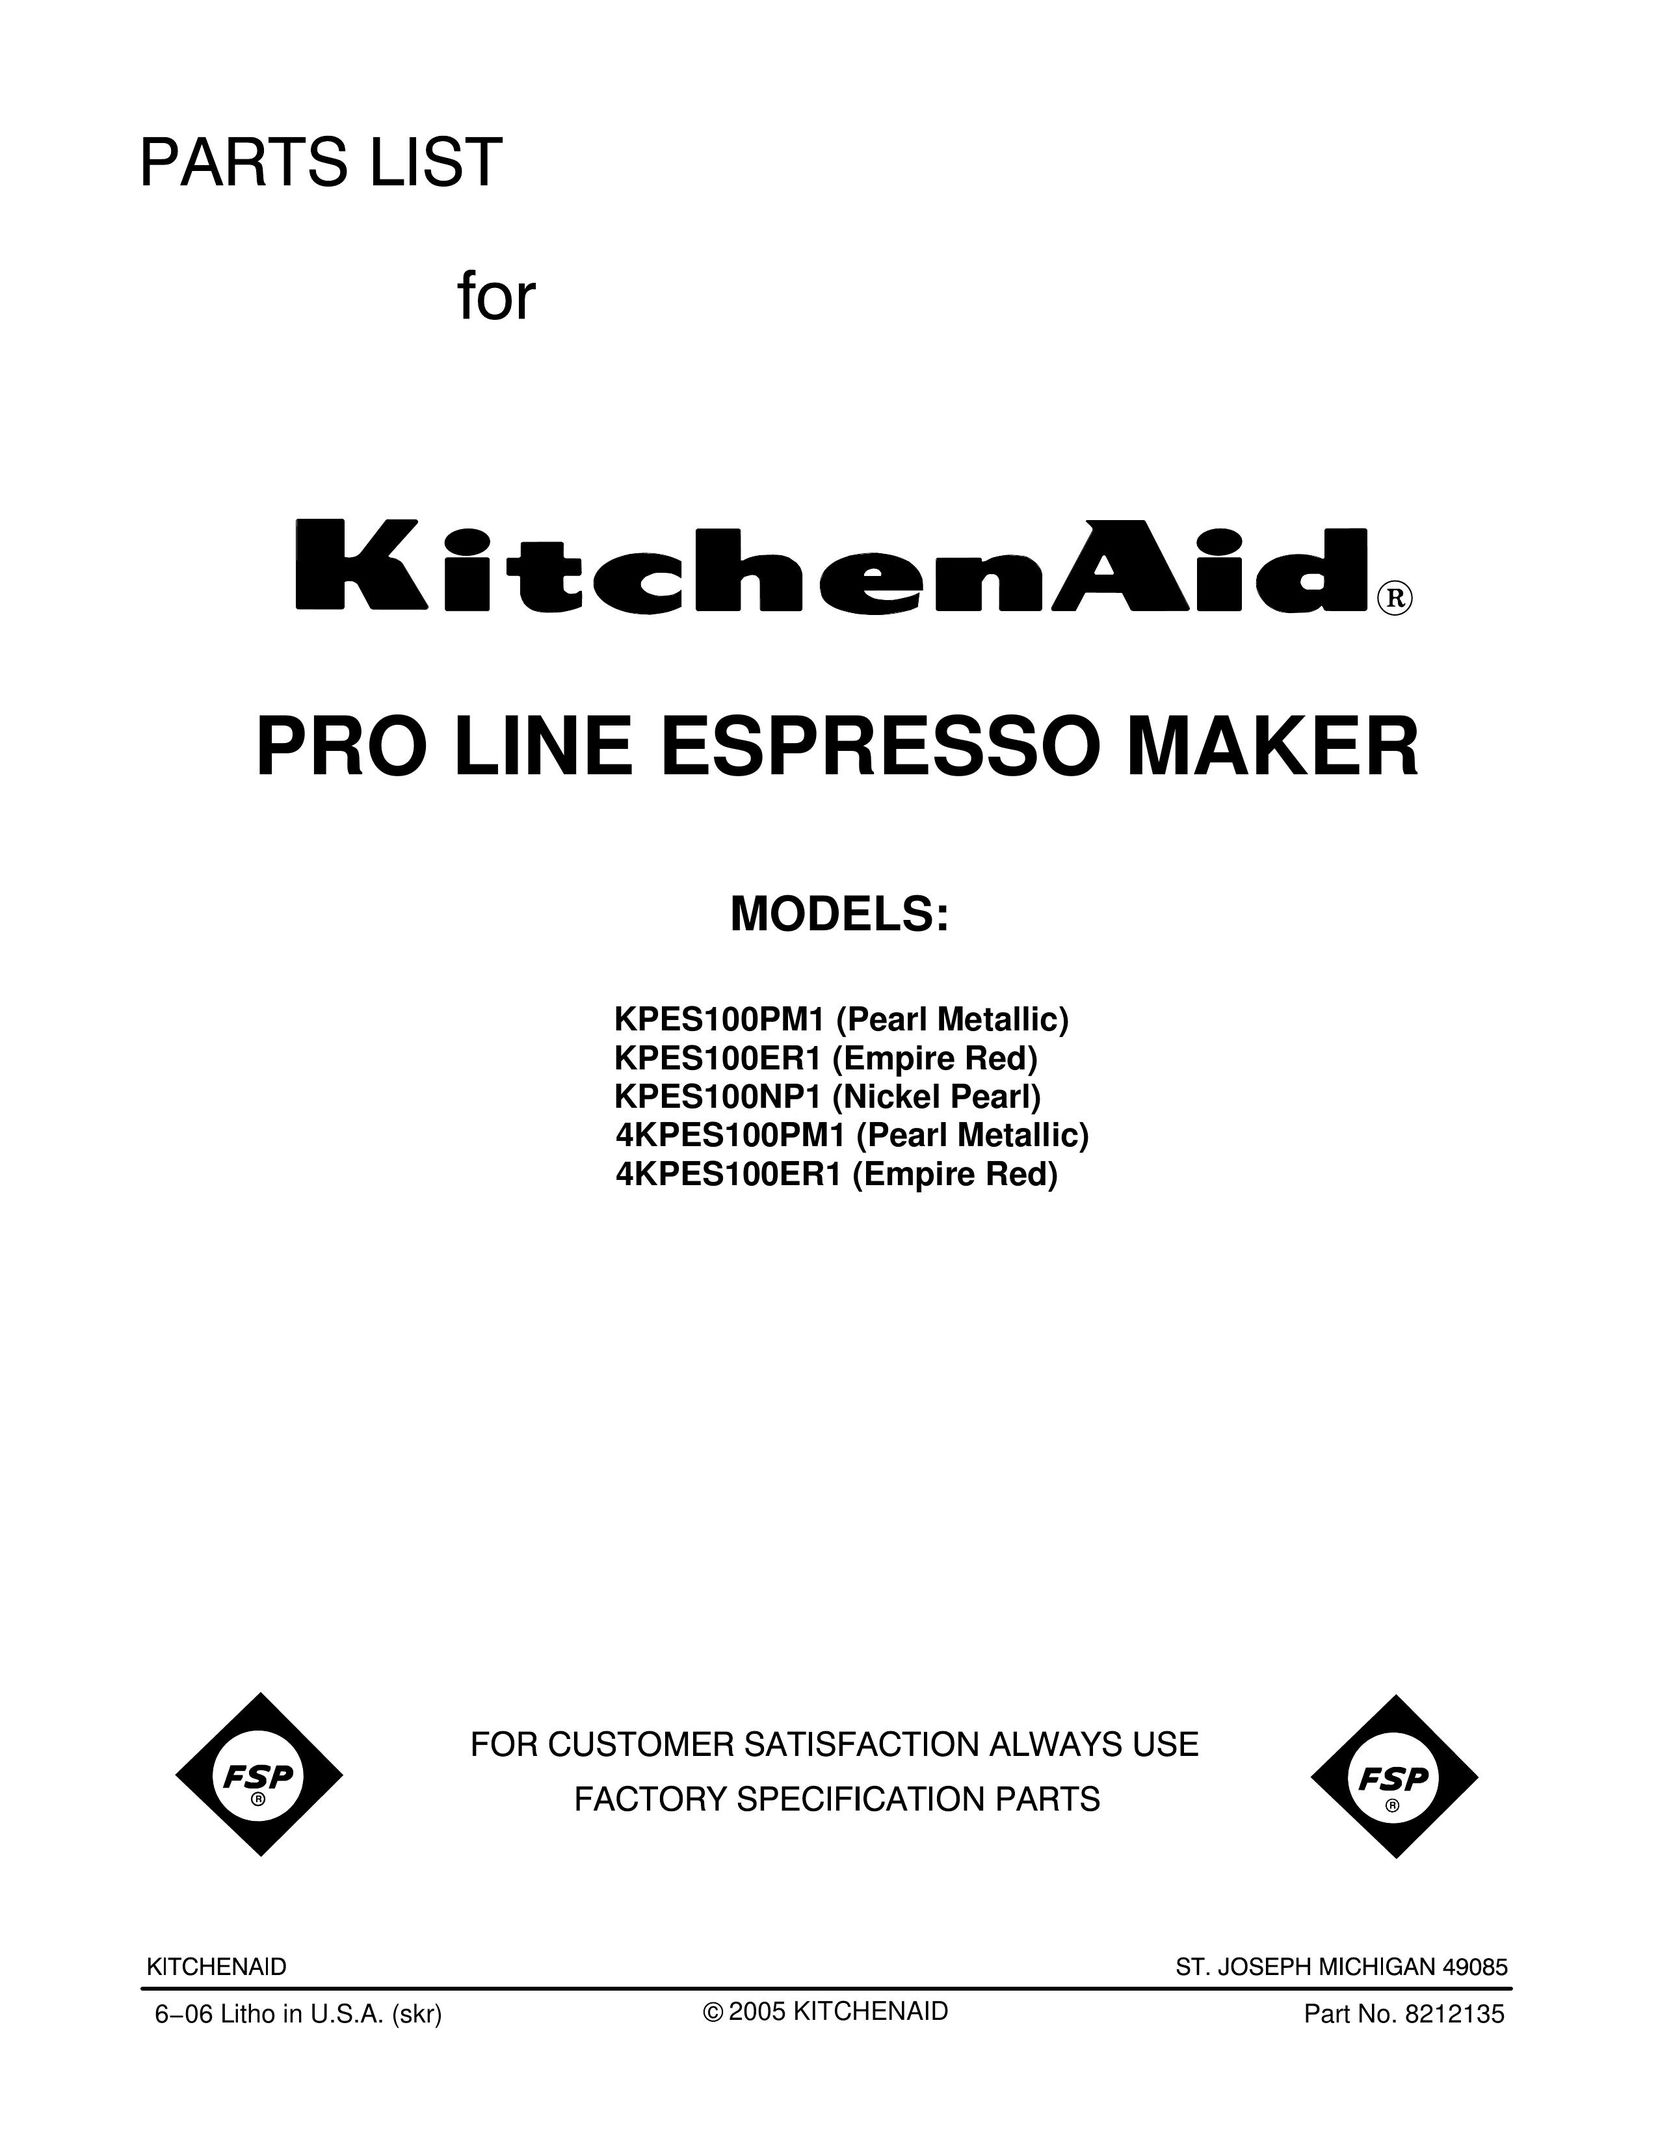 Maytag KPES100PM1 Espresso Maker User Manual